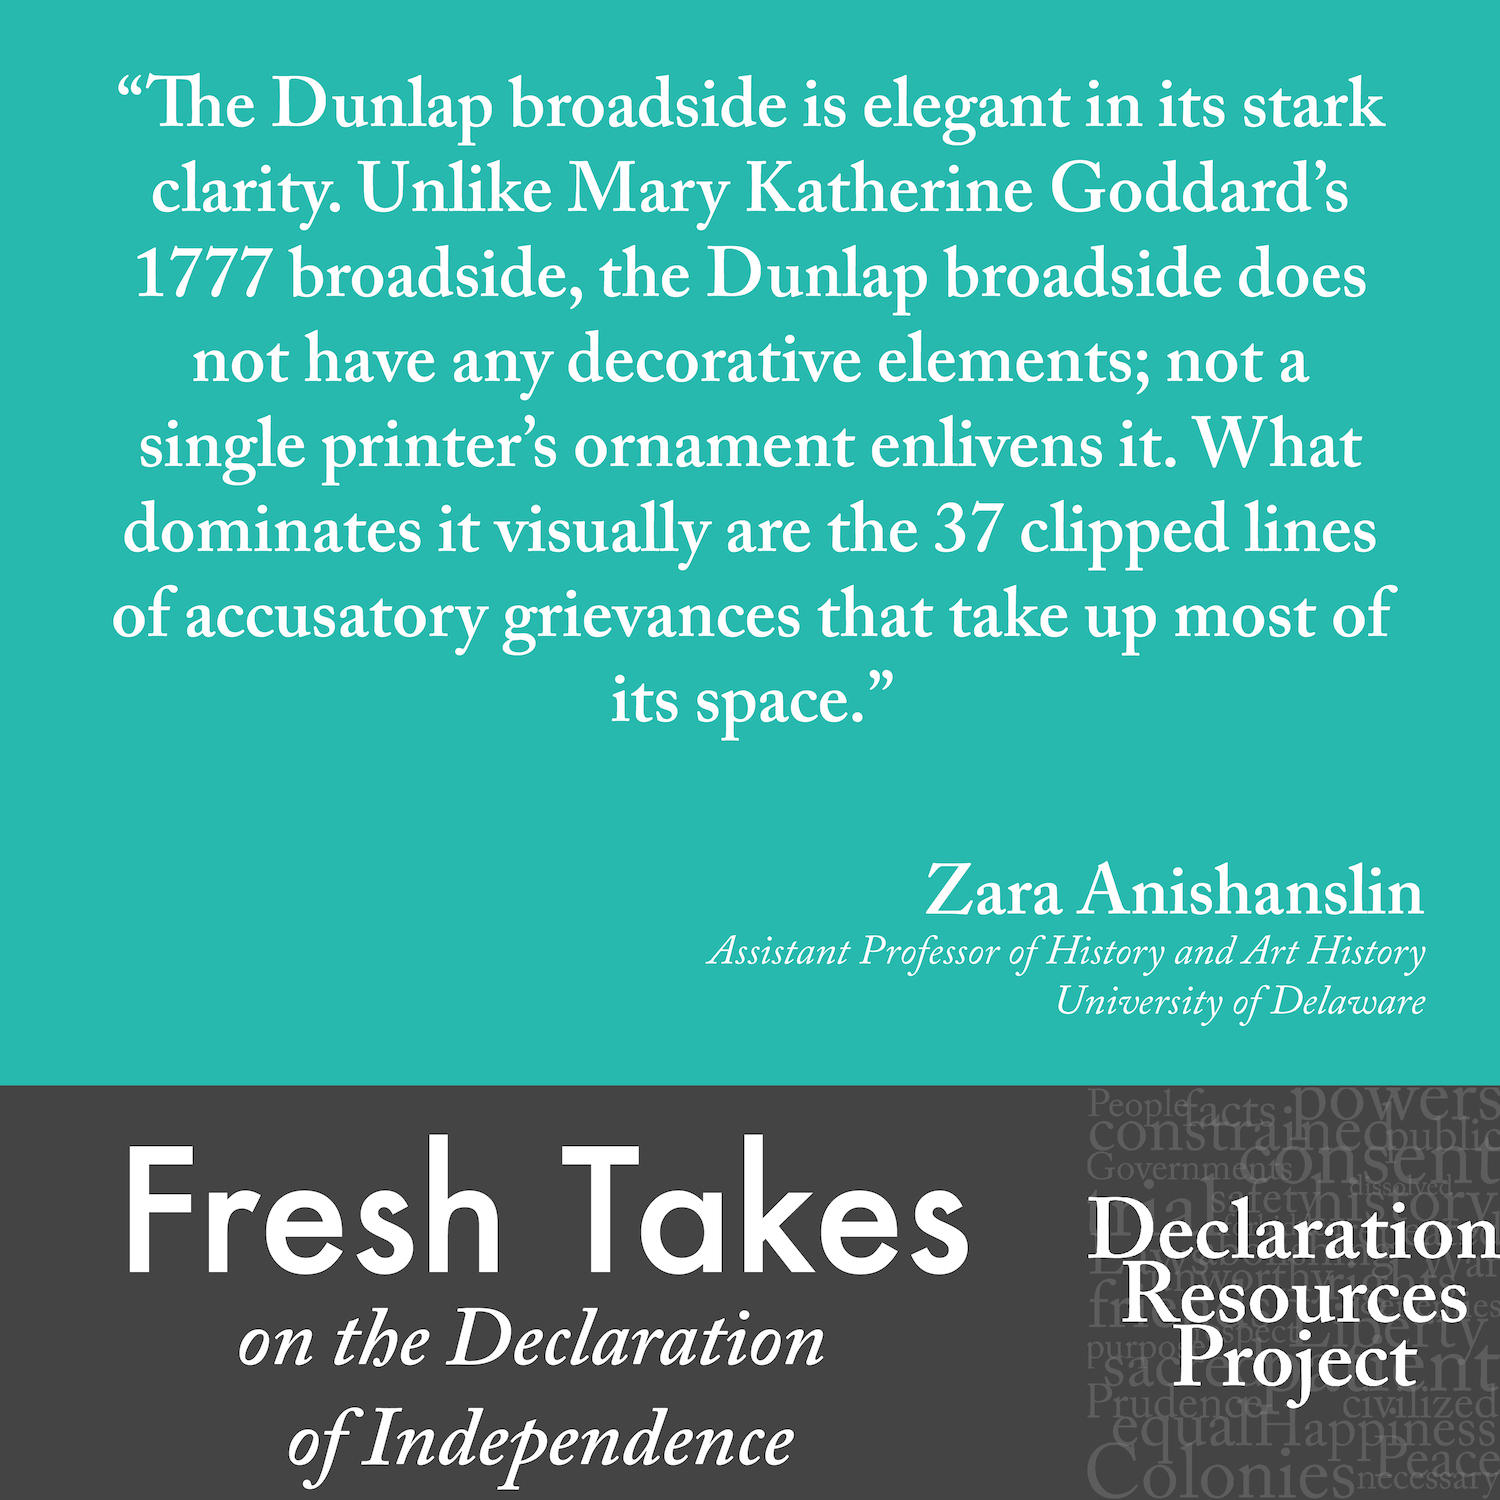 Zara Anishanslin's Fresh Take on the Declaration of Independence